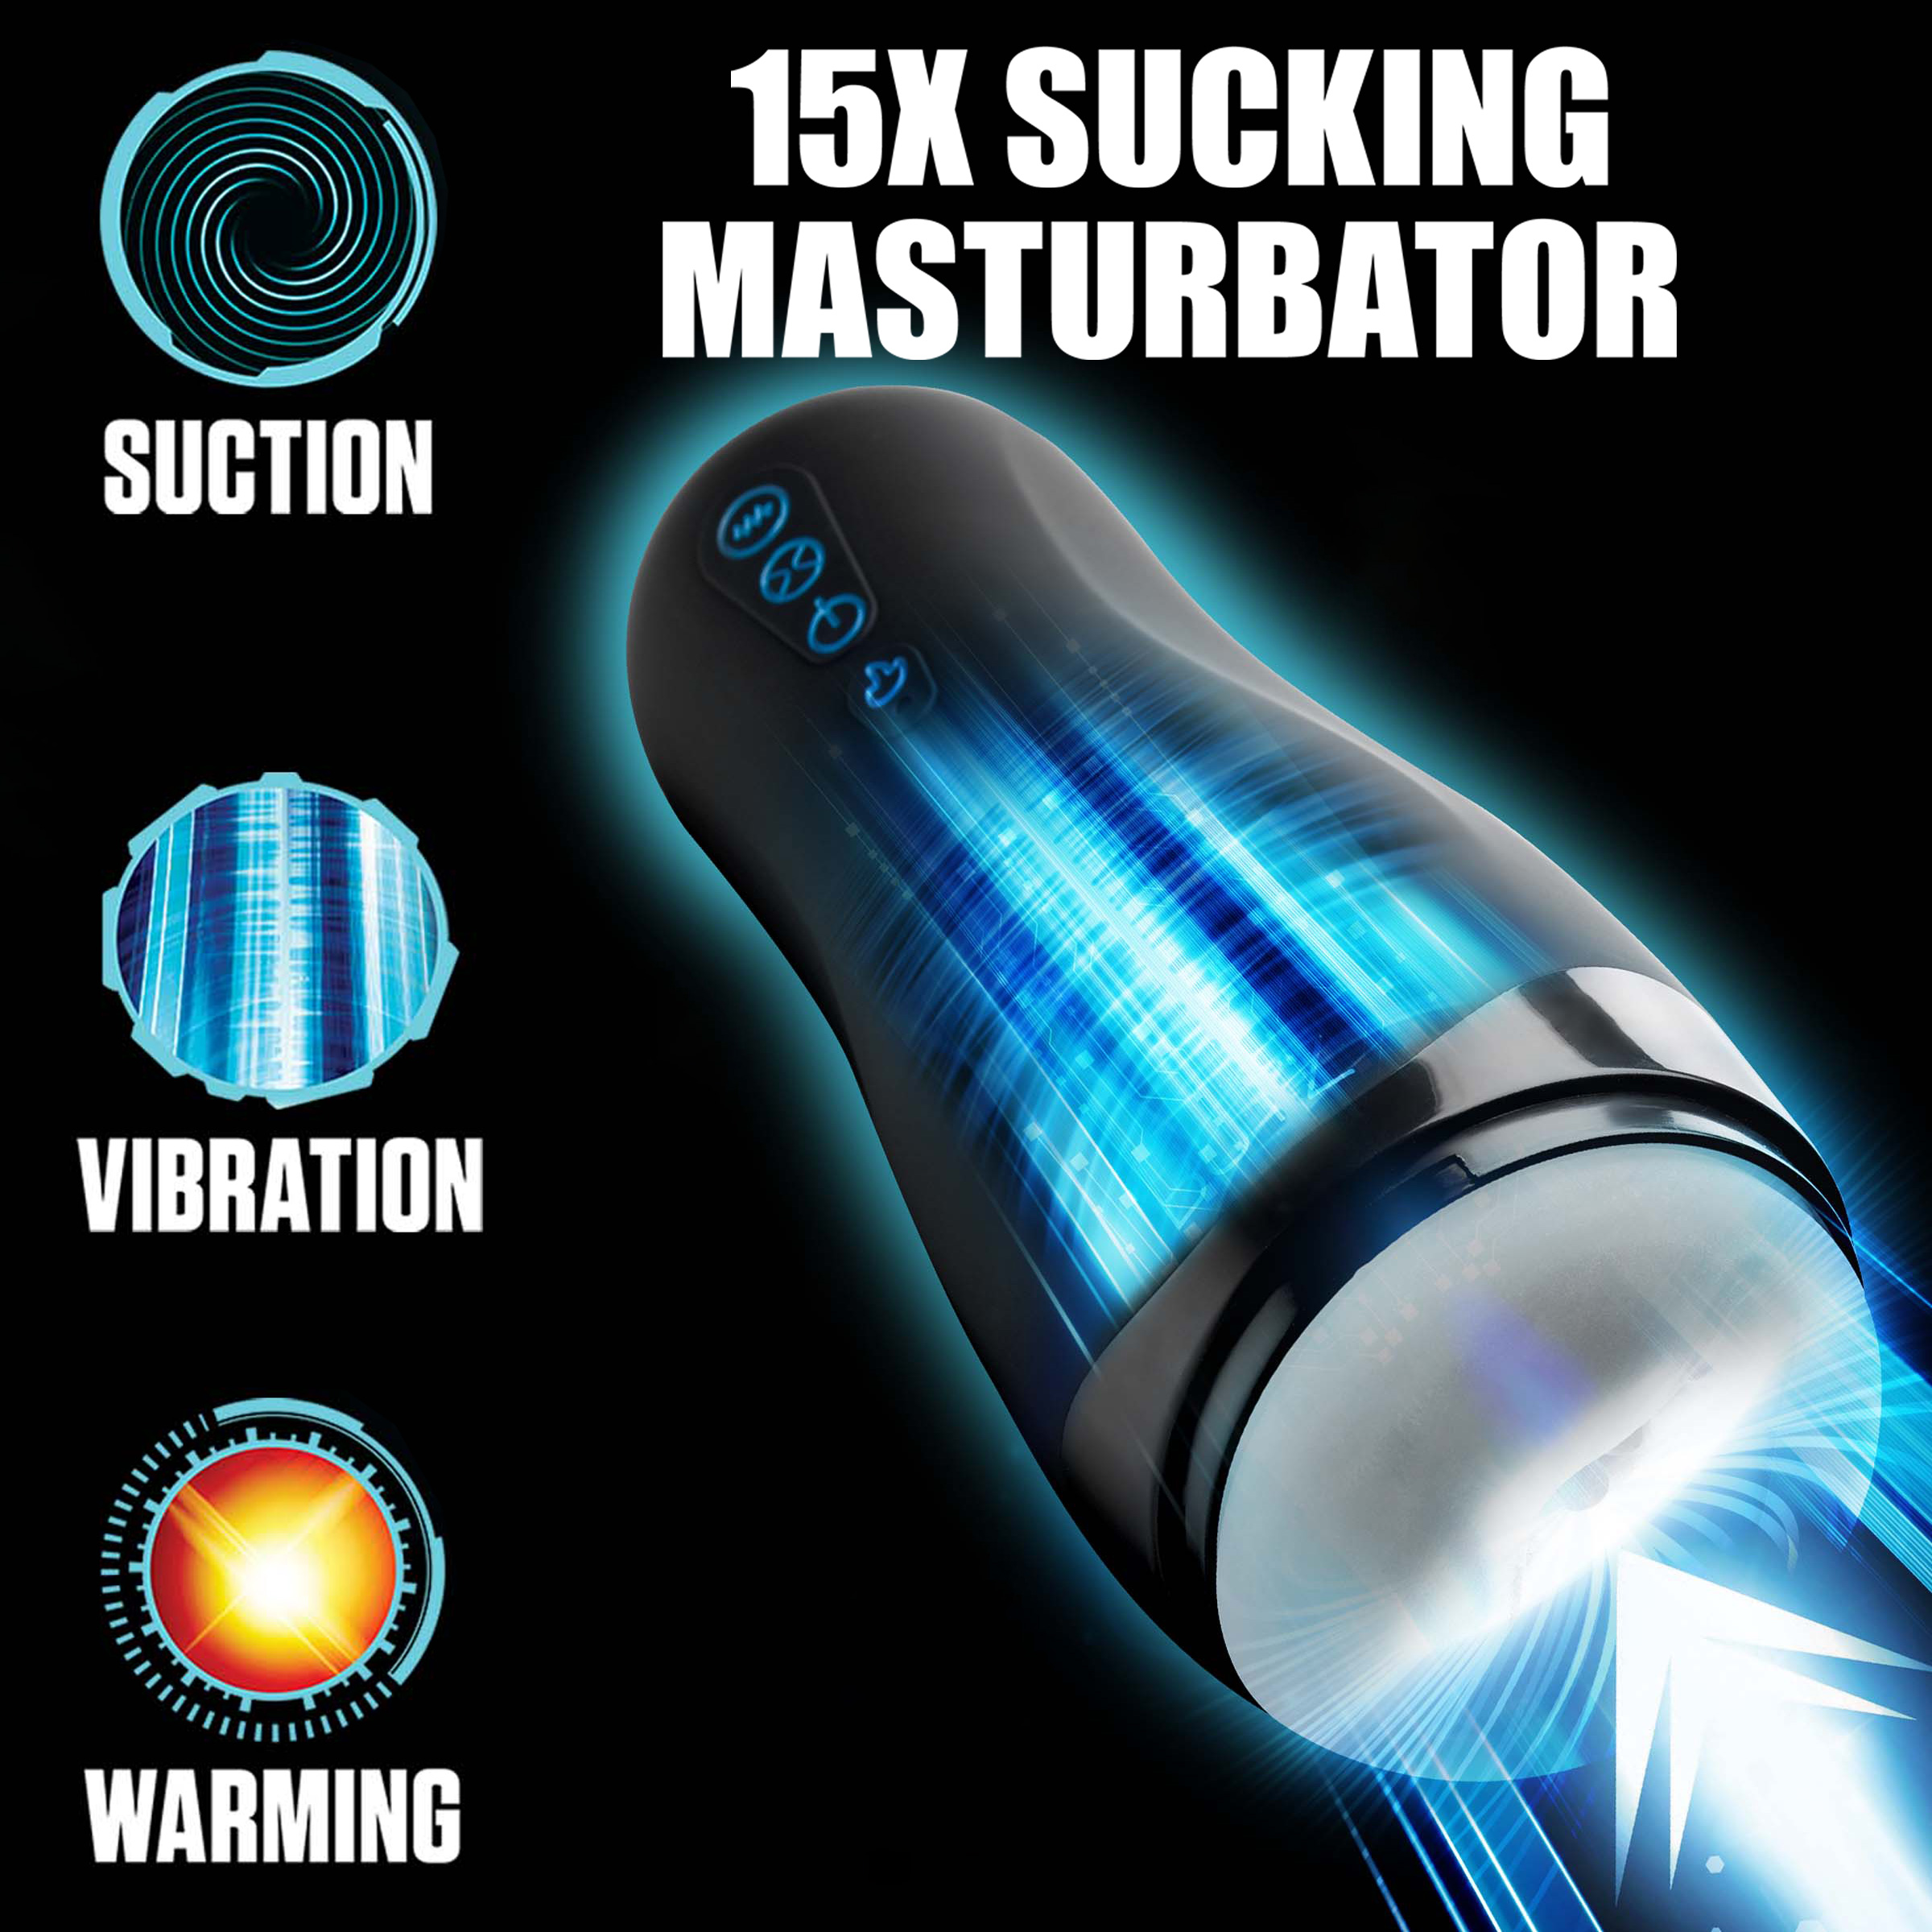 The Milker 15X Sucking Masturbator